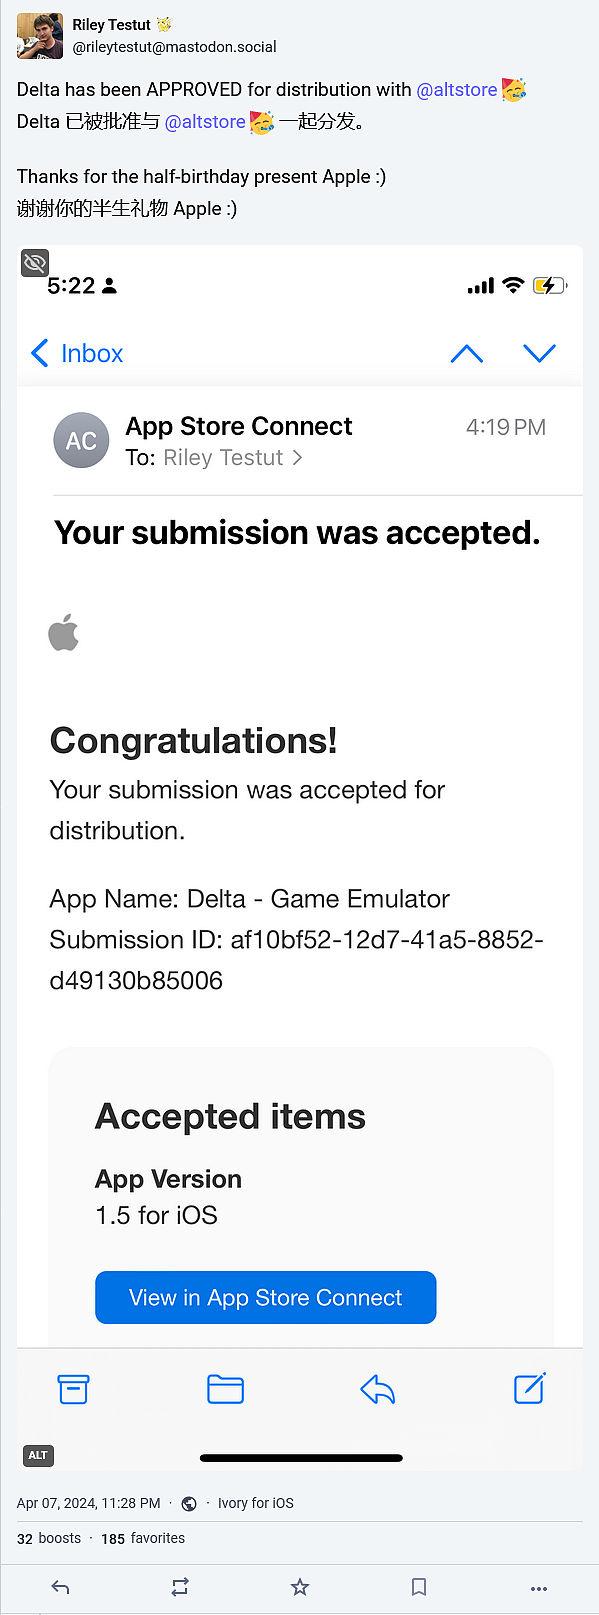 Delta 游戏模拟器被苹果批准进入 AltStore，后续有望上架 App Store - 1